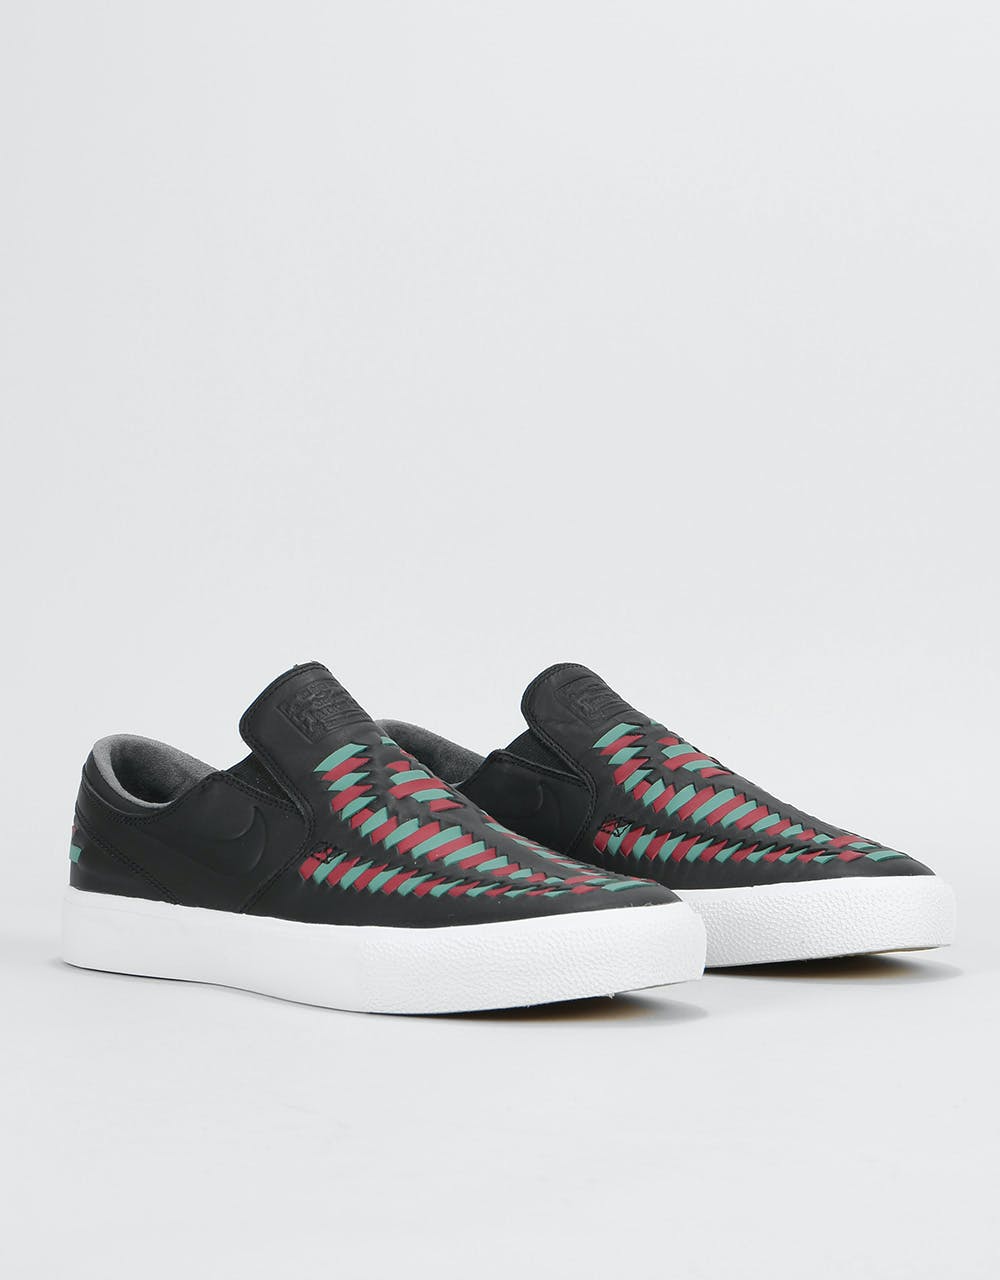 Nike SB Zoom Janoski Slip RM Crafted Skate Shoes - Black/Bicoastal-Red